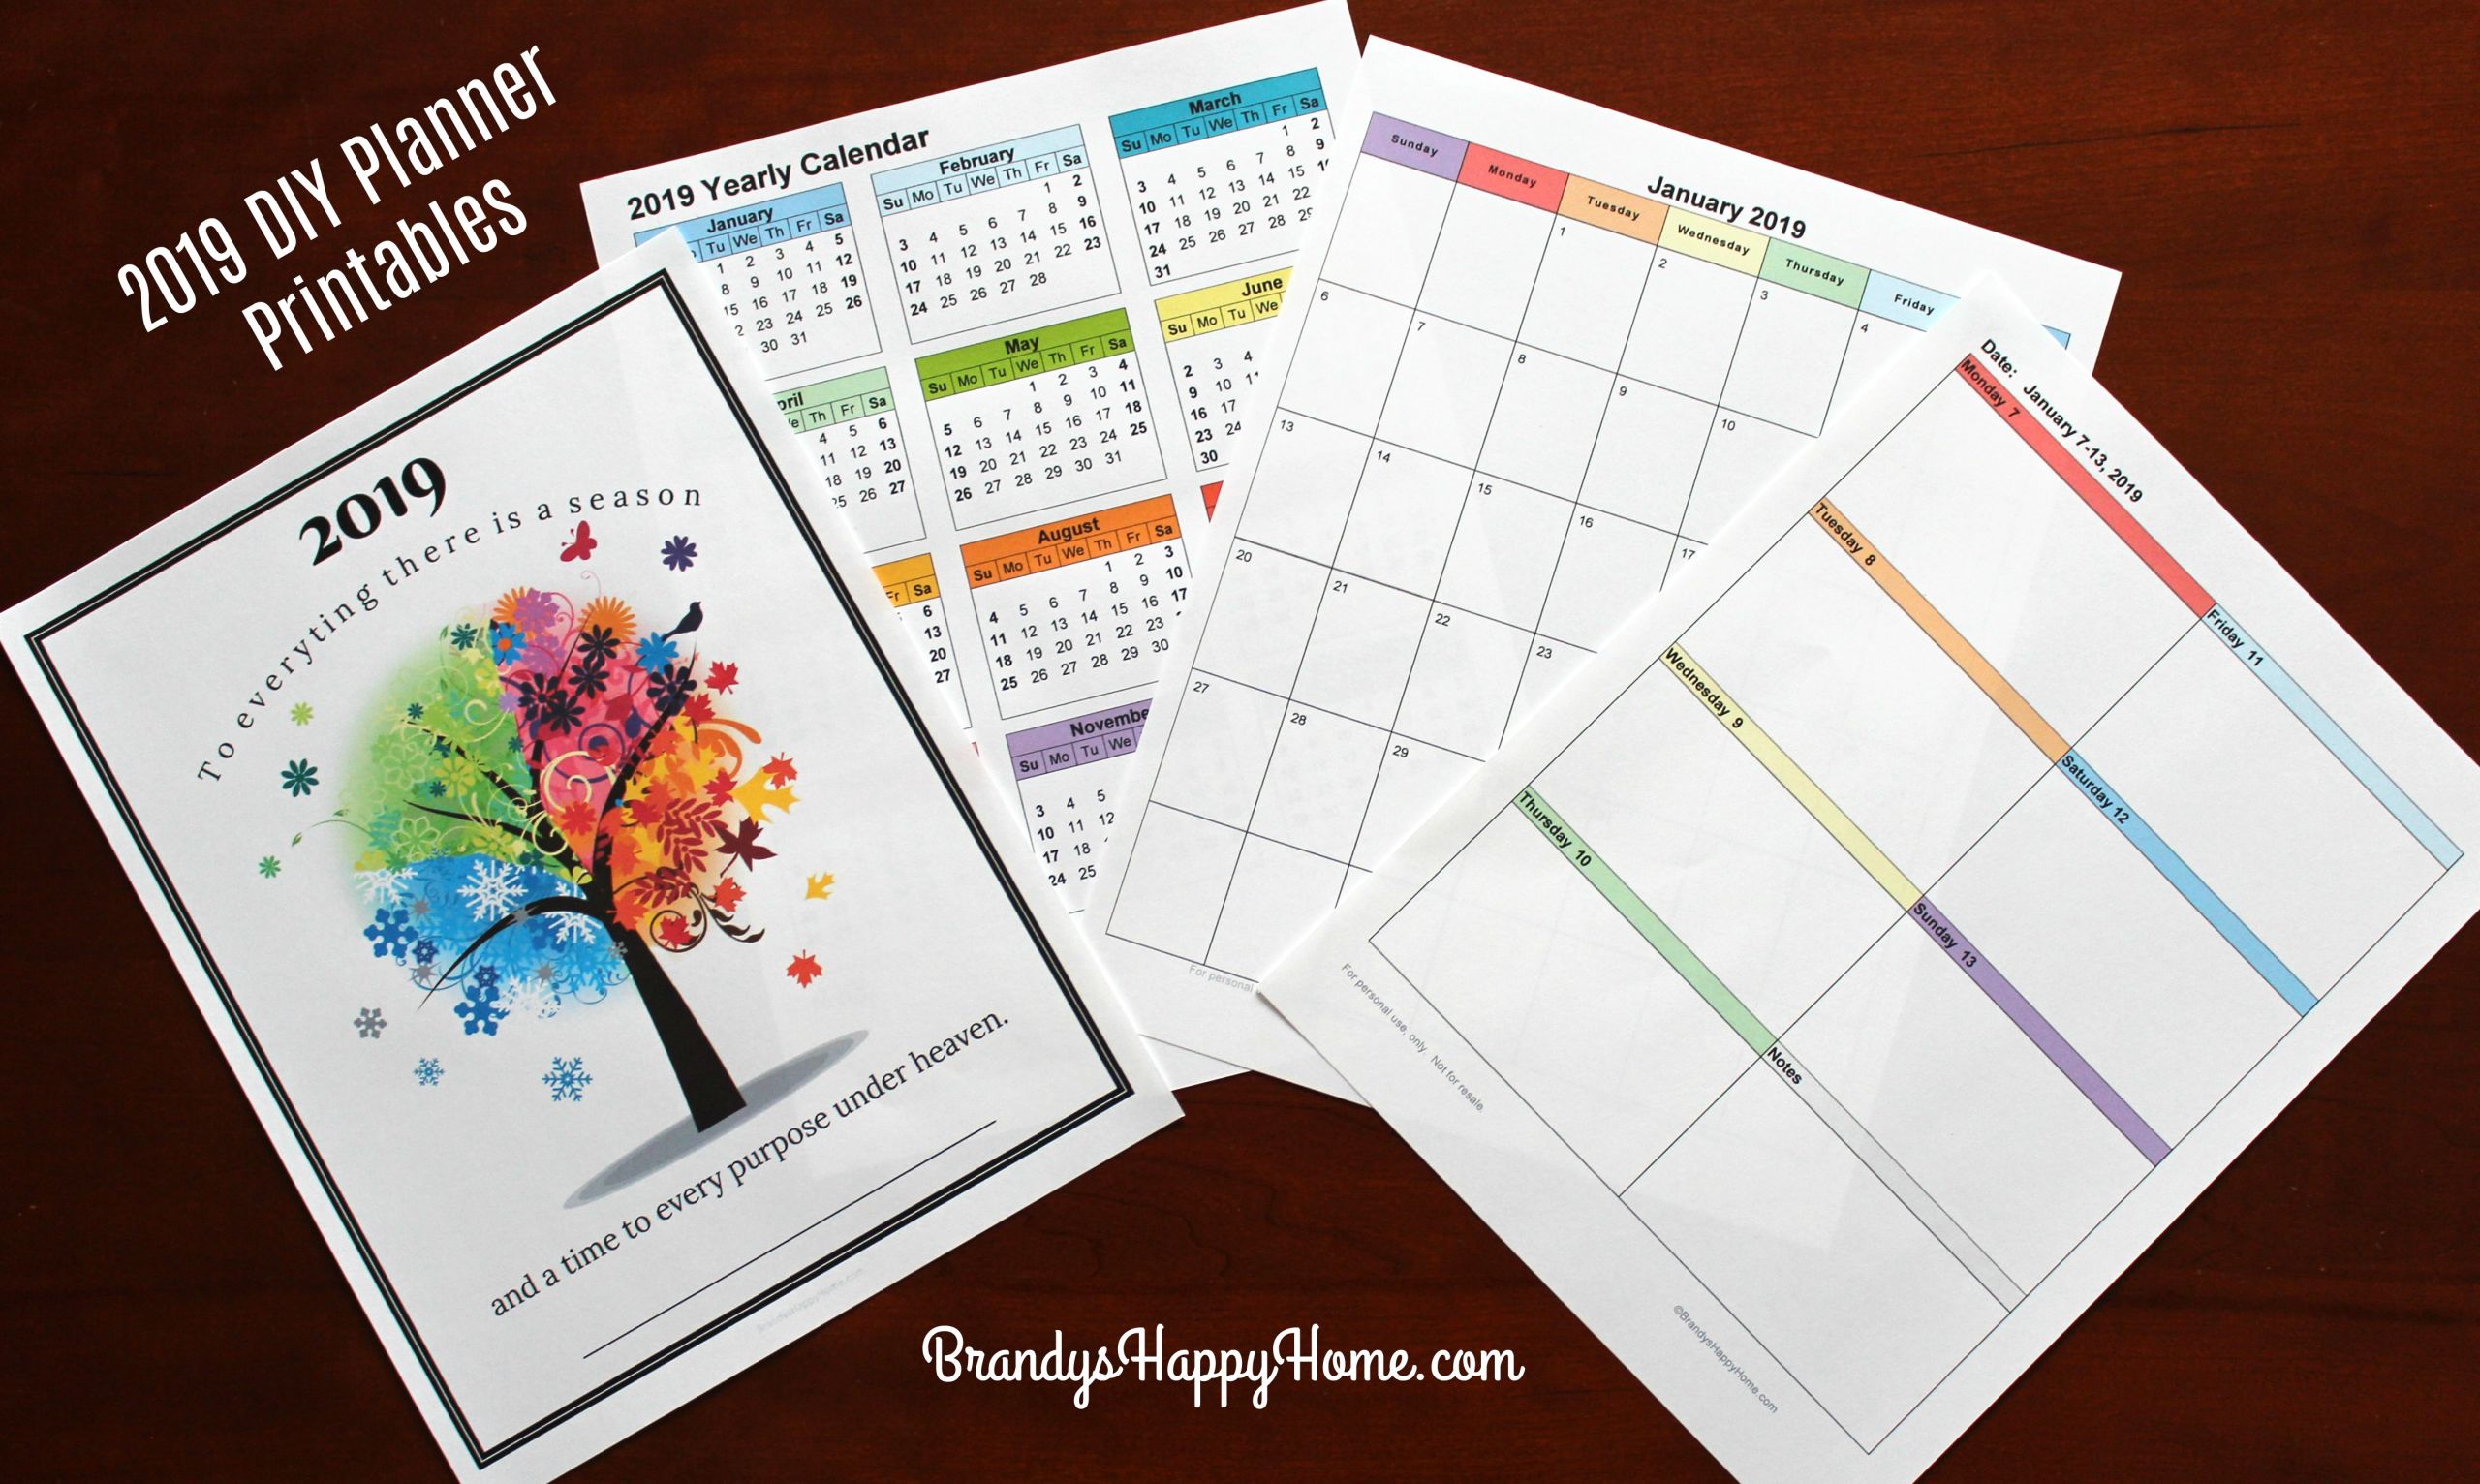 DIY Planner Printables 2019
 FREE 2019 DIY Calendar Planner Printables